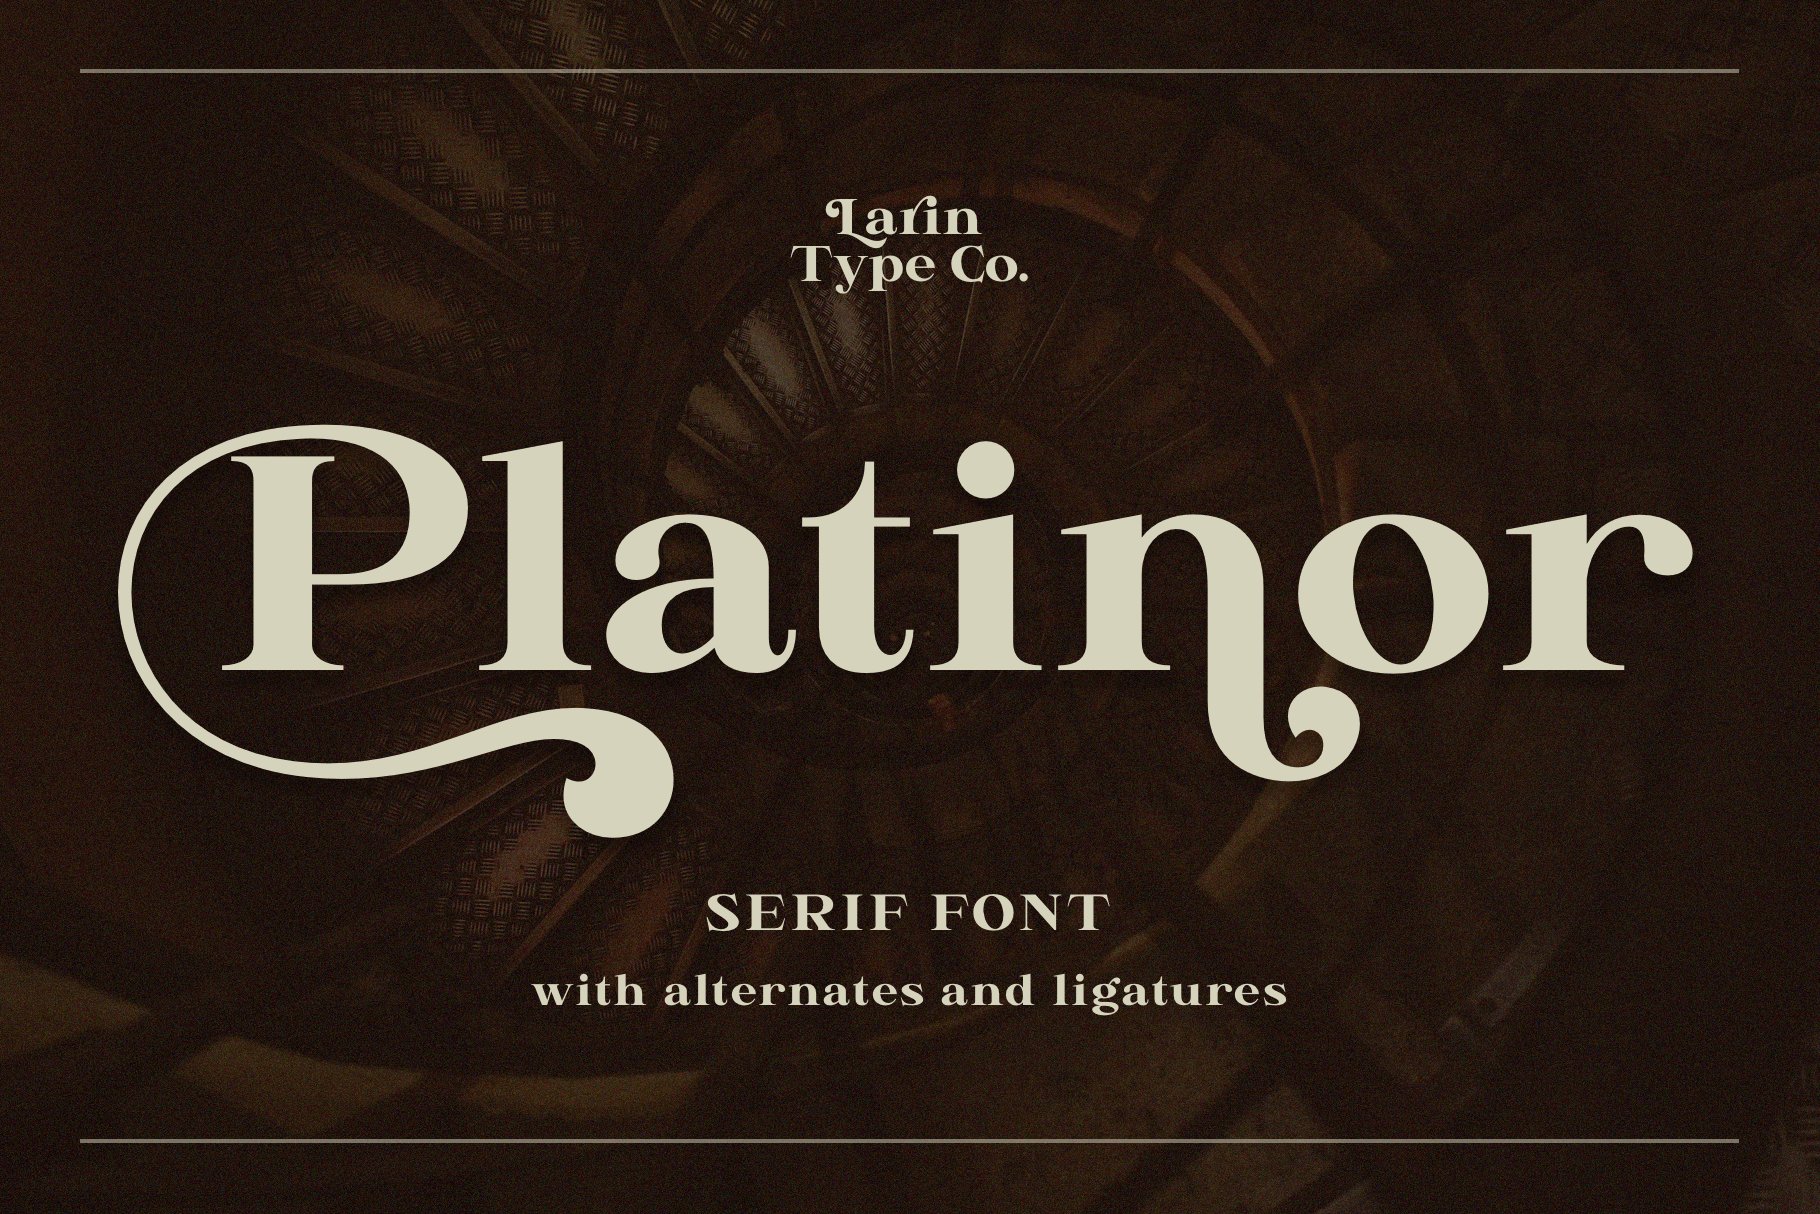 Platinor cover image.